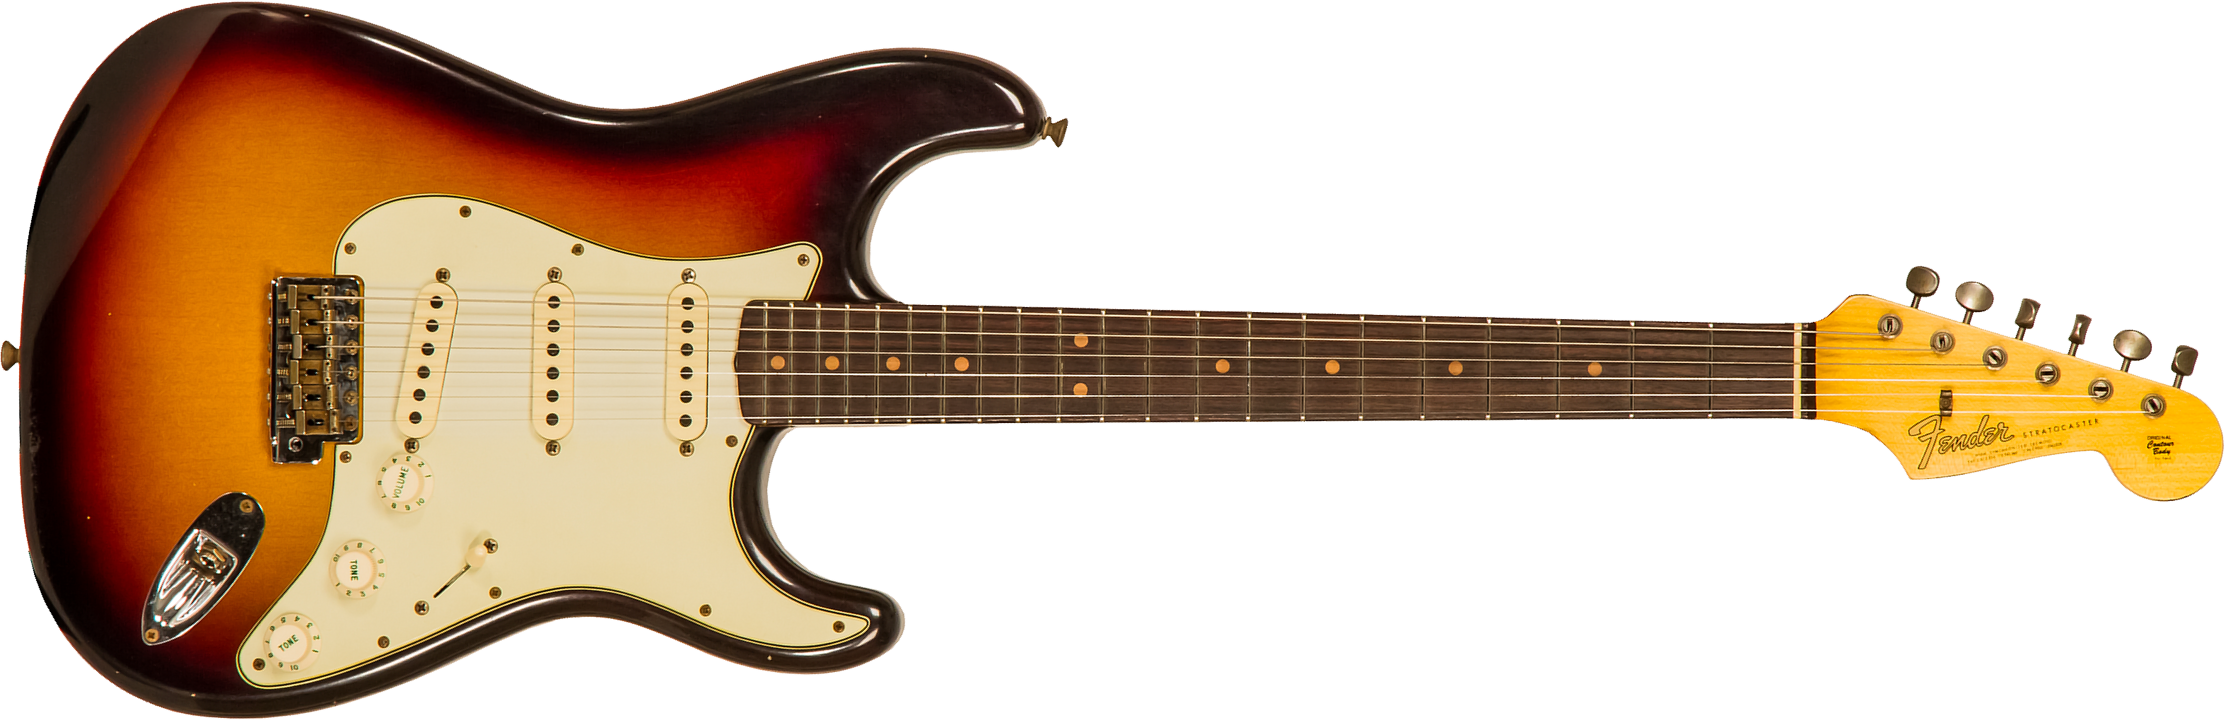 Fender Custom Shop Strat 1964 3s Trem Rw - Journeyman Relic Target 3-color Sunburst - Str shape electric guitar - Main picture